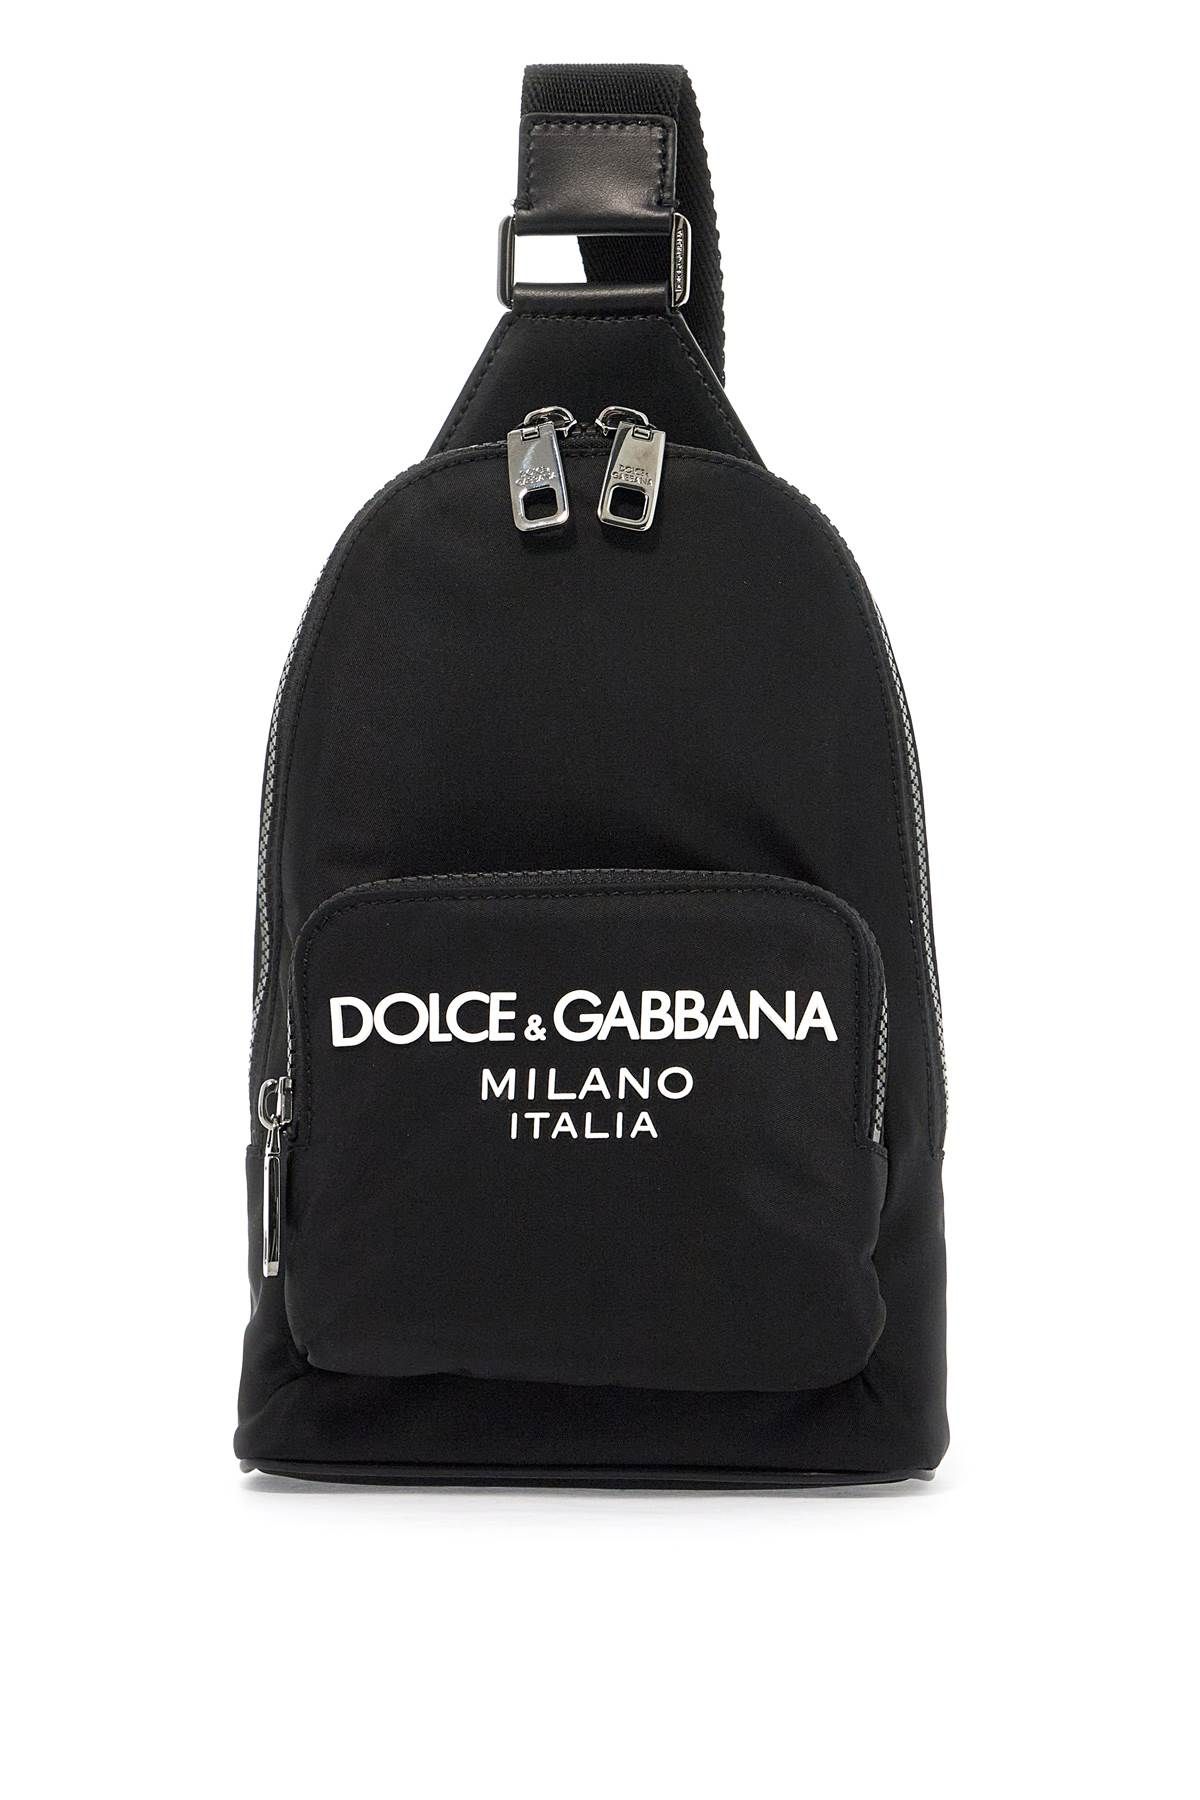 Dolce & Gabbana DOLCE & GABBANA nylon shoulder bag with crossbody